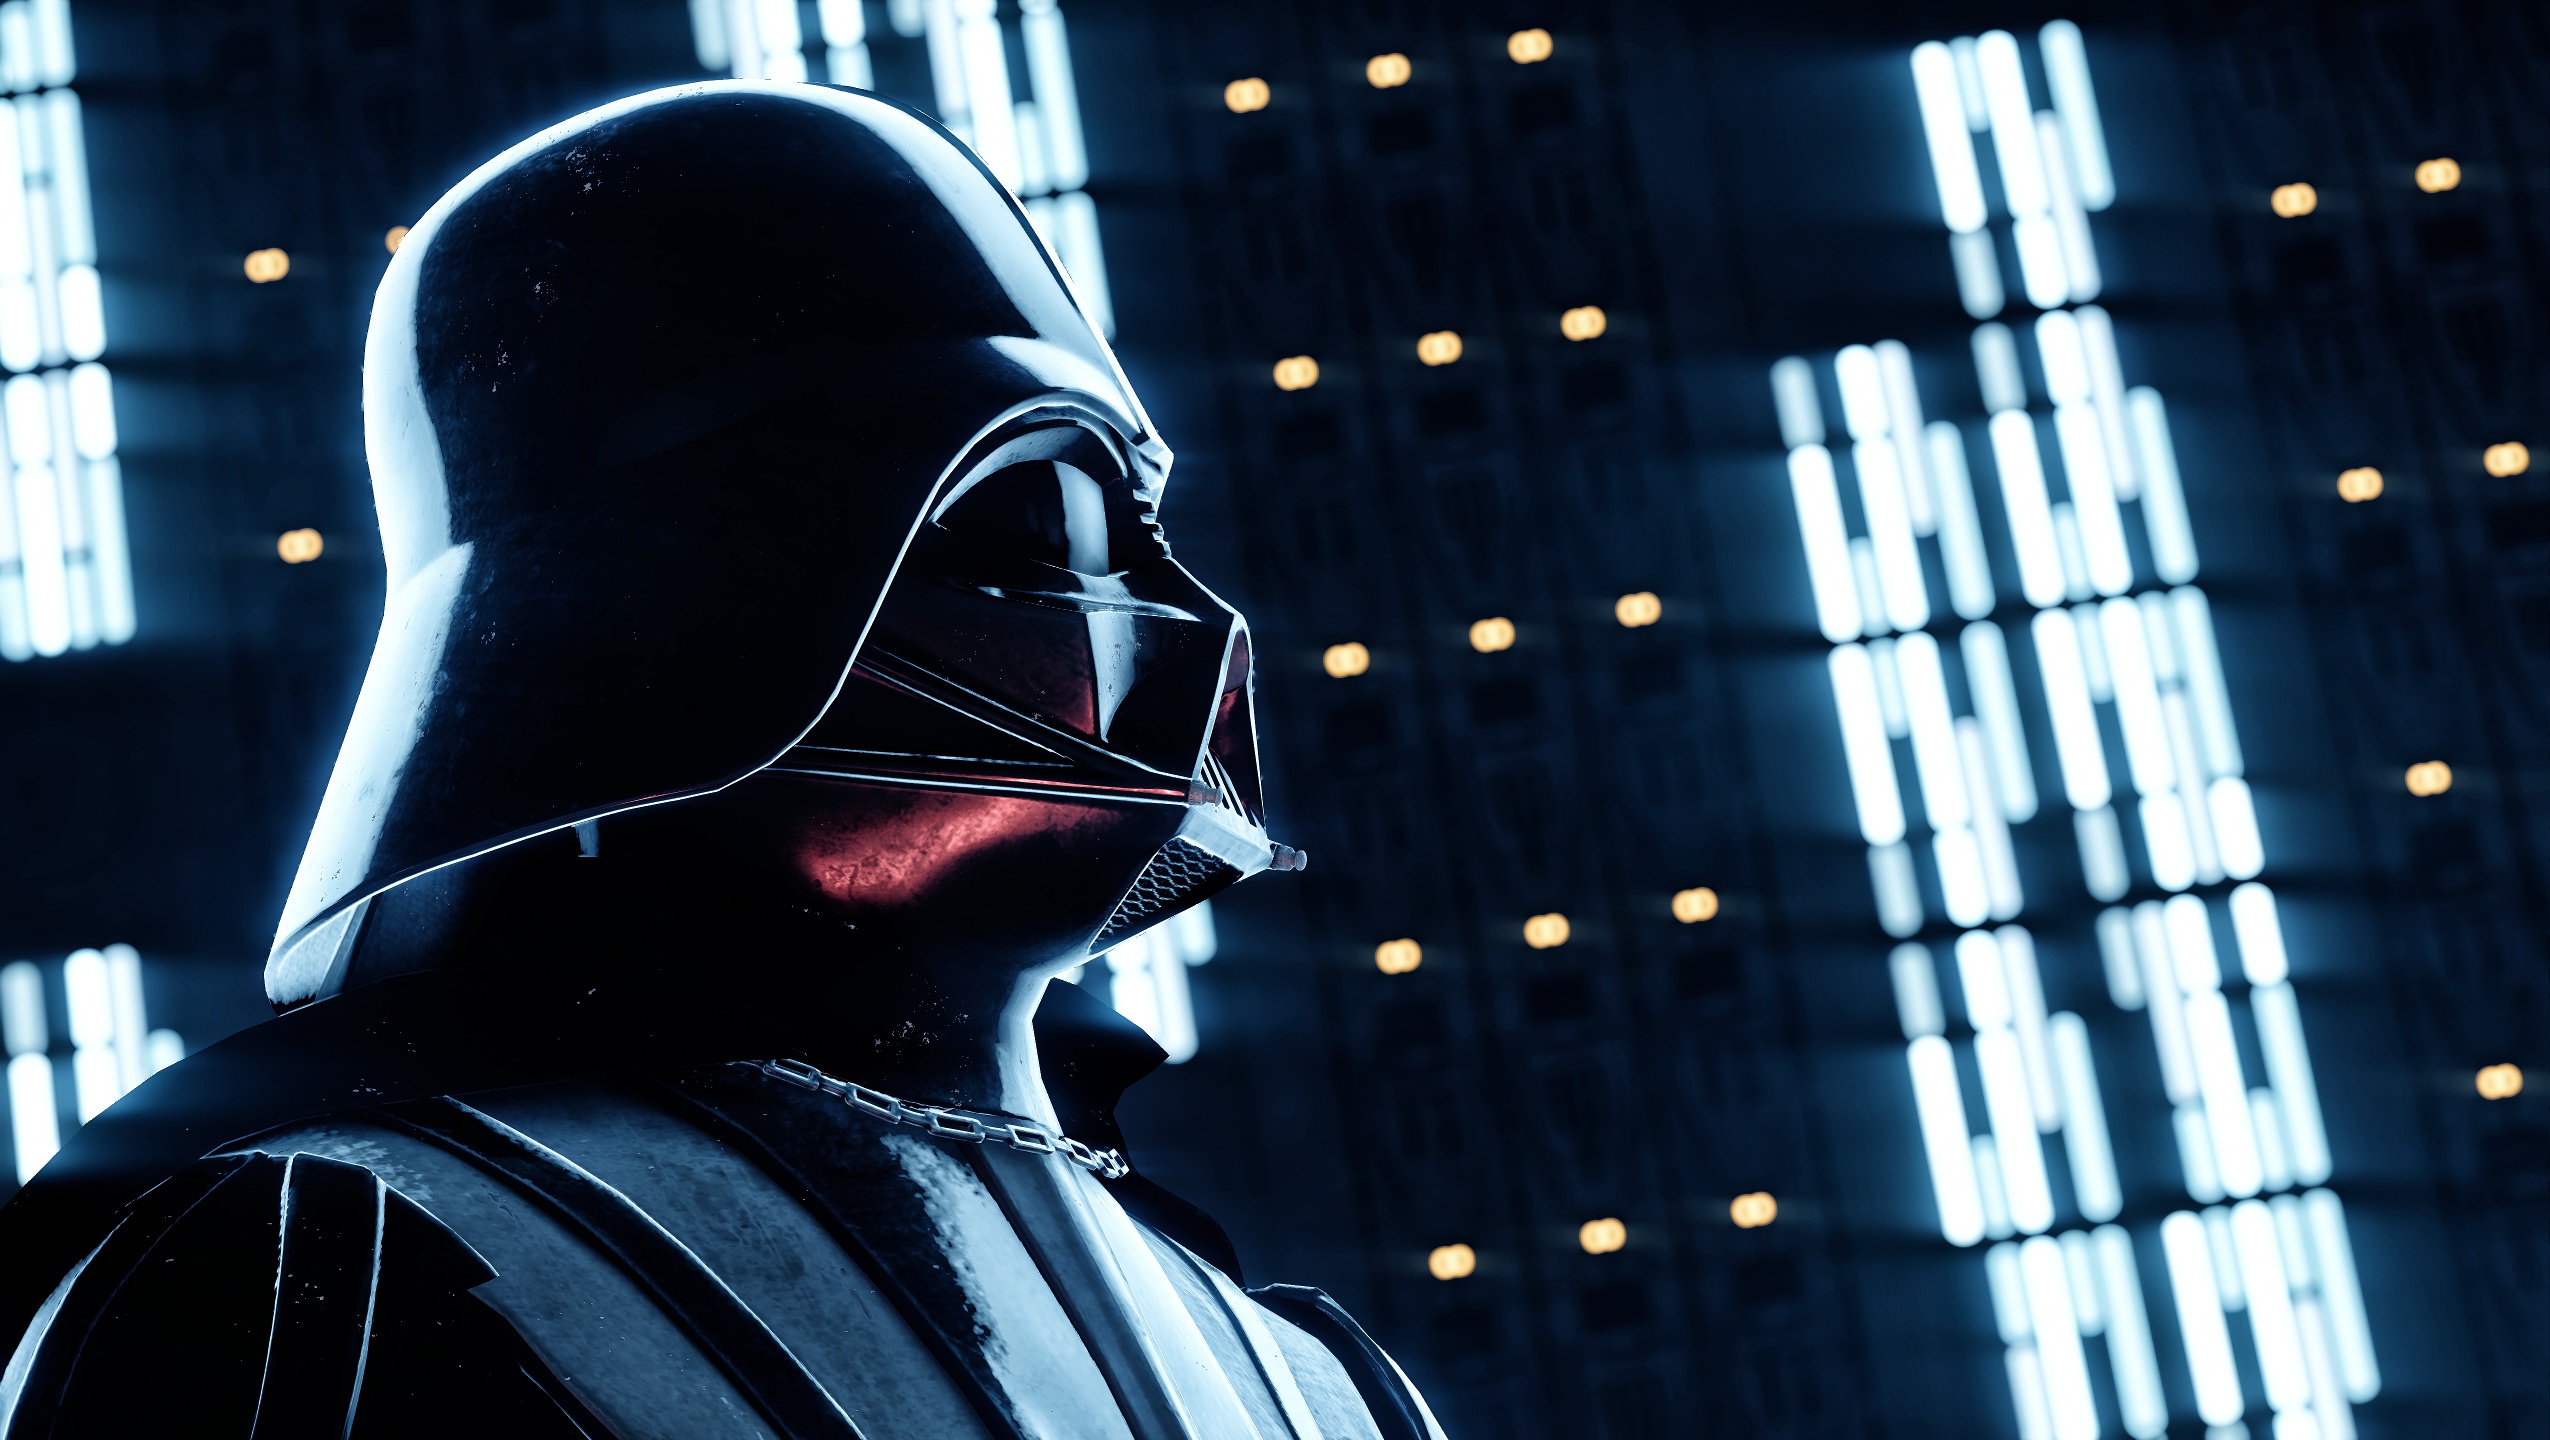 Darth Vader, Star Wars, Star Wars Battlefront II, Video games Wallpaper